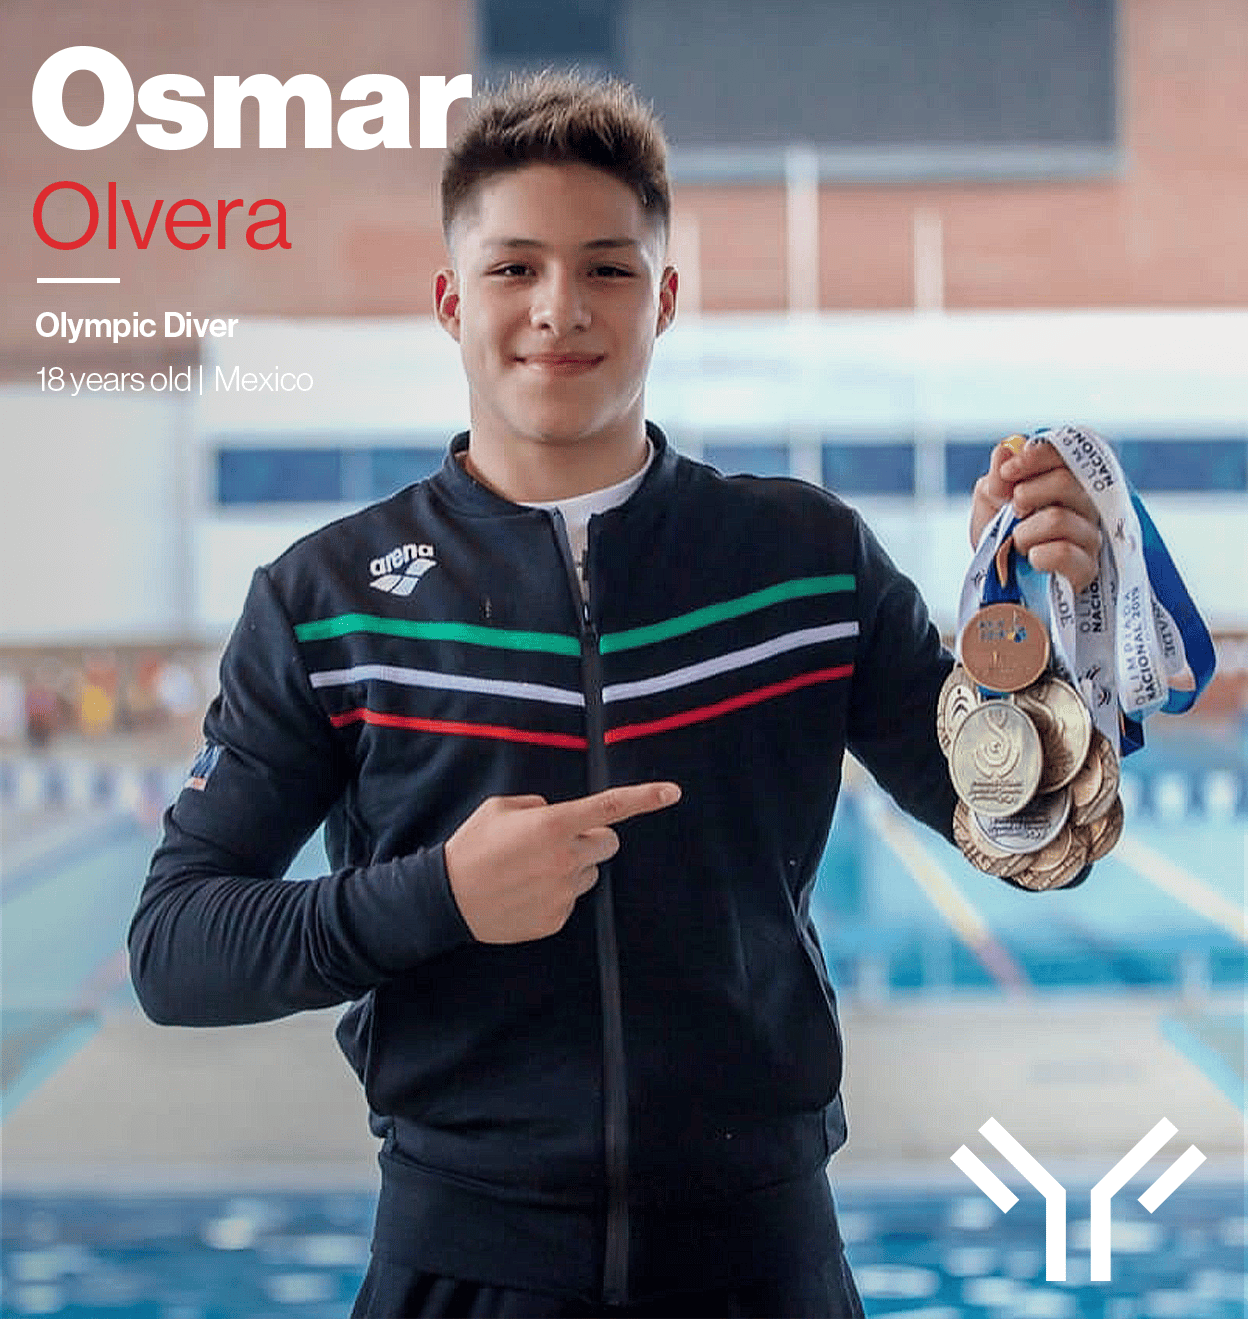 Meet the Team Sport Athlete of the Month: Osmar Olvera